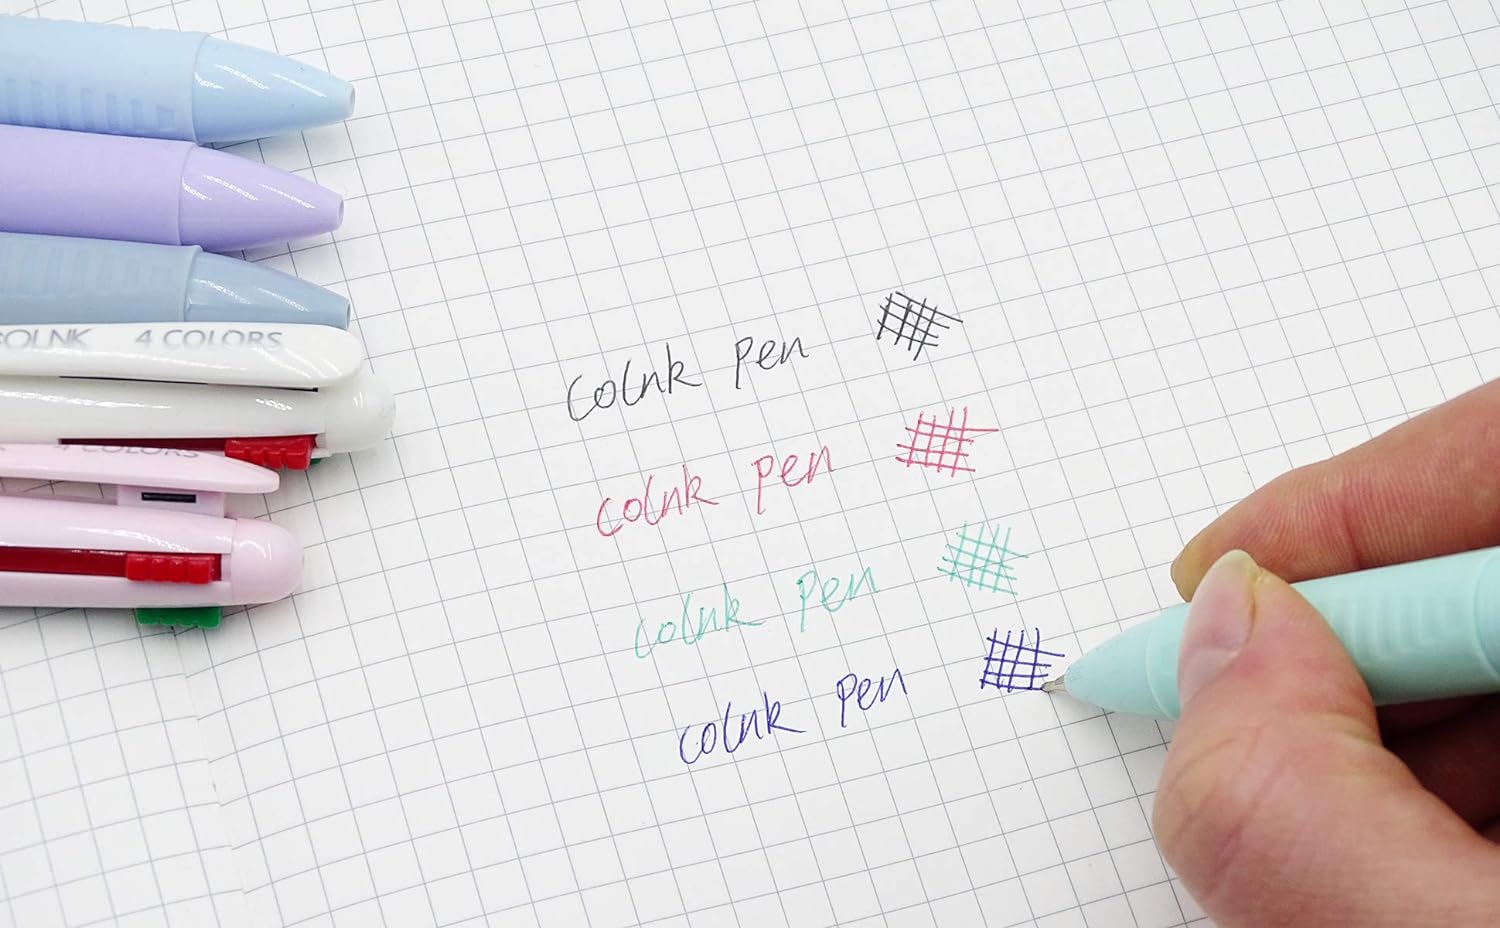 COLNK 4IN1 Multicolor Ballpoint Pen 0.5mm 6 Count - TTpen